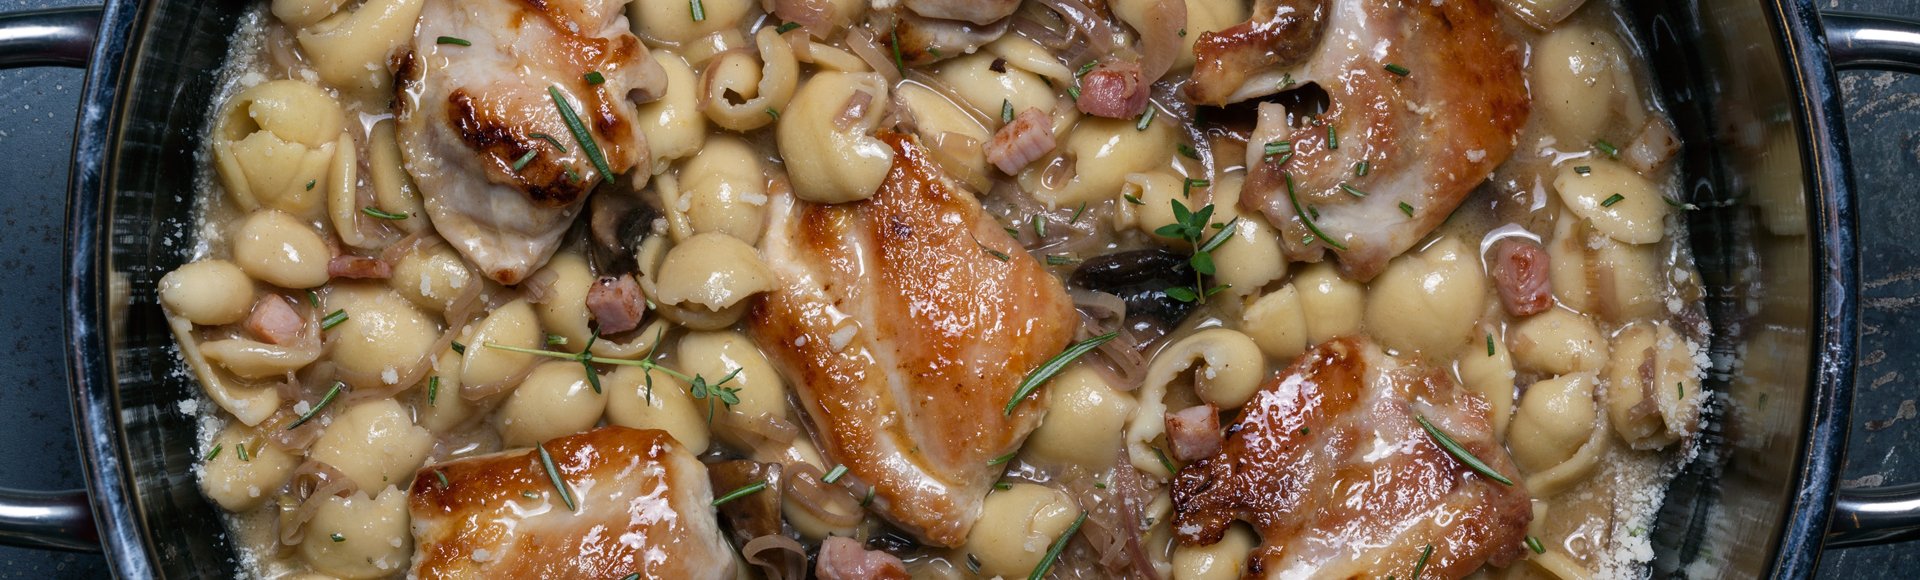 Kourkoubines pasta with chicken, mushrooms & truffle oil